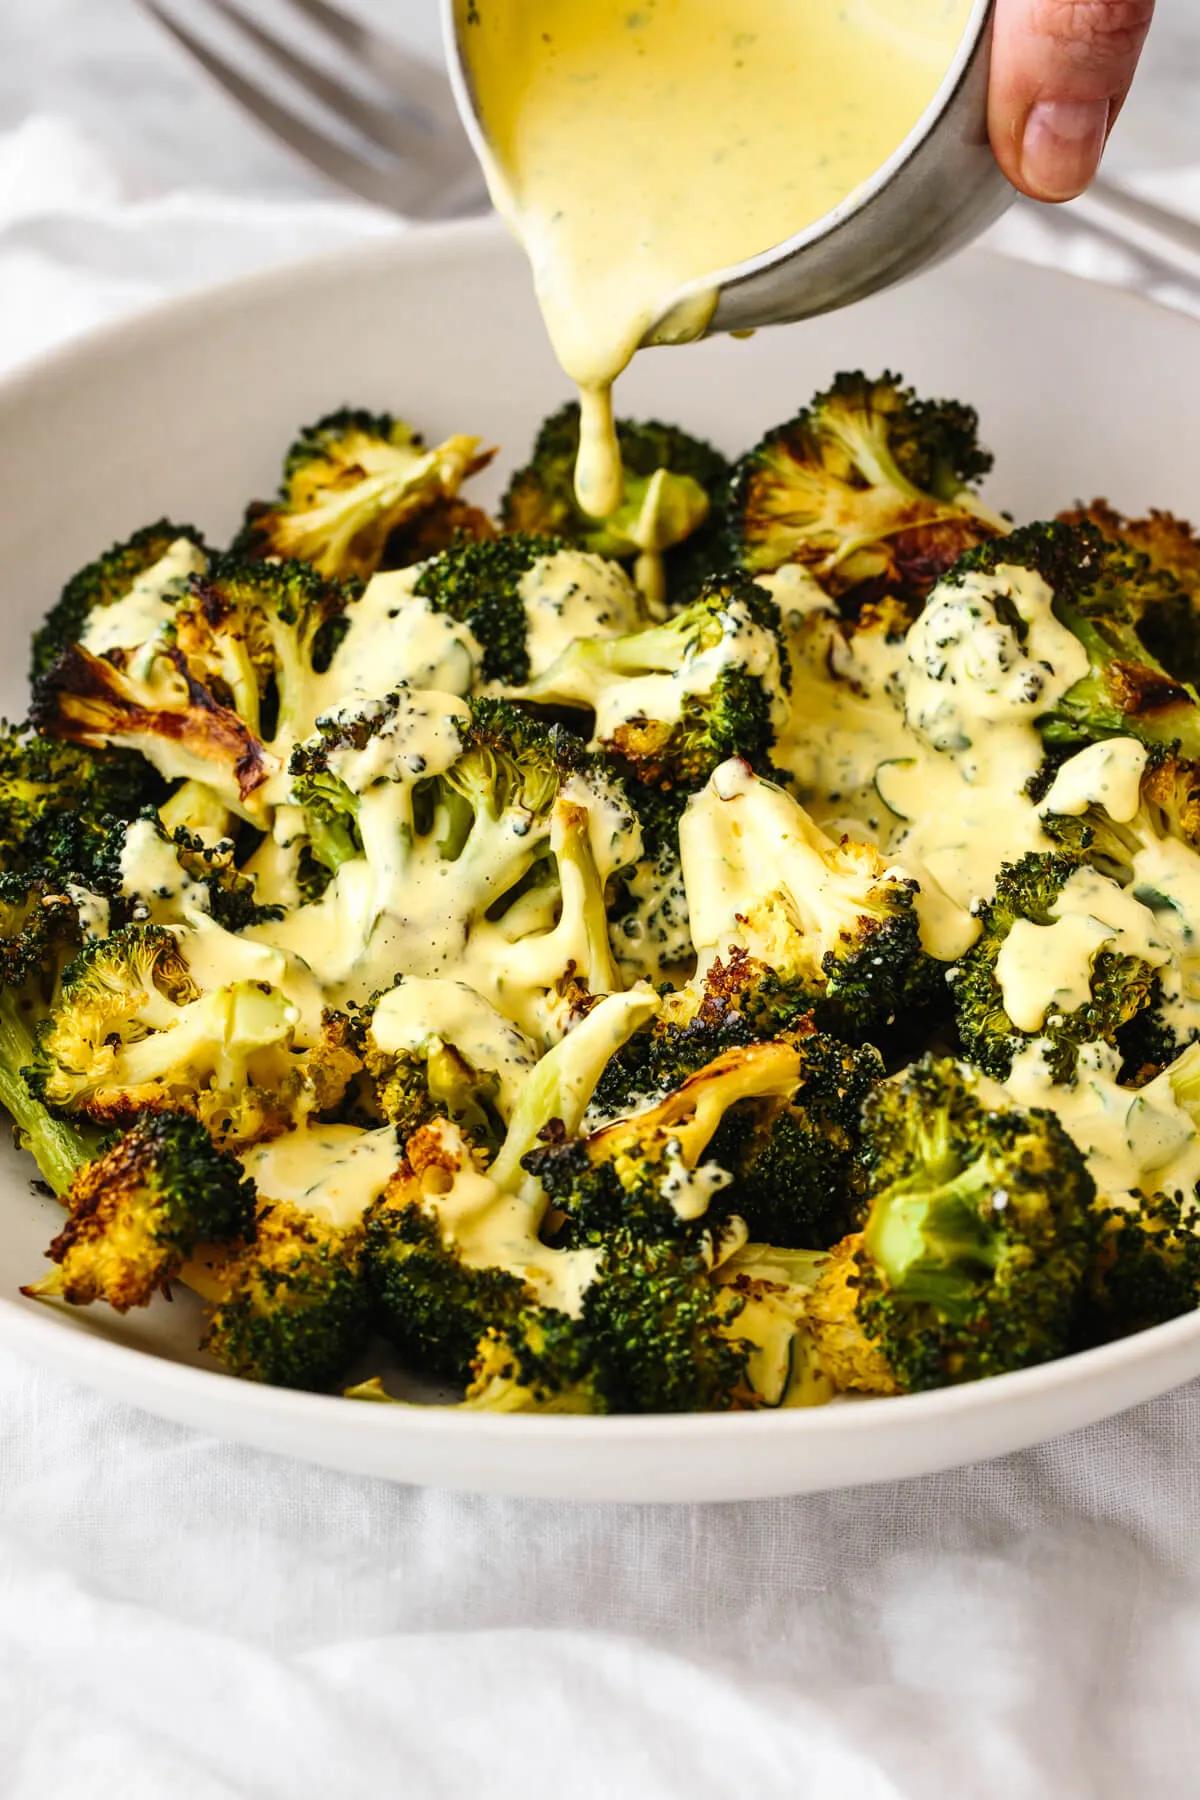 Roasted Broccoli With Hollandaise Sauce - Downshiftology